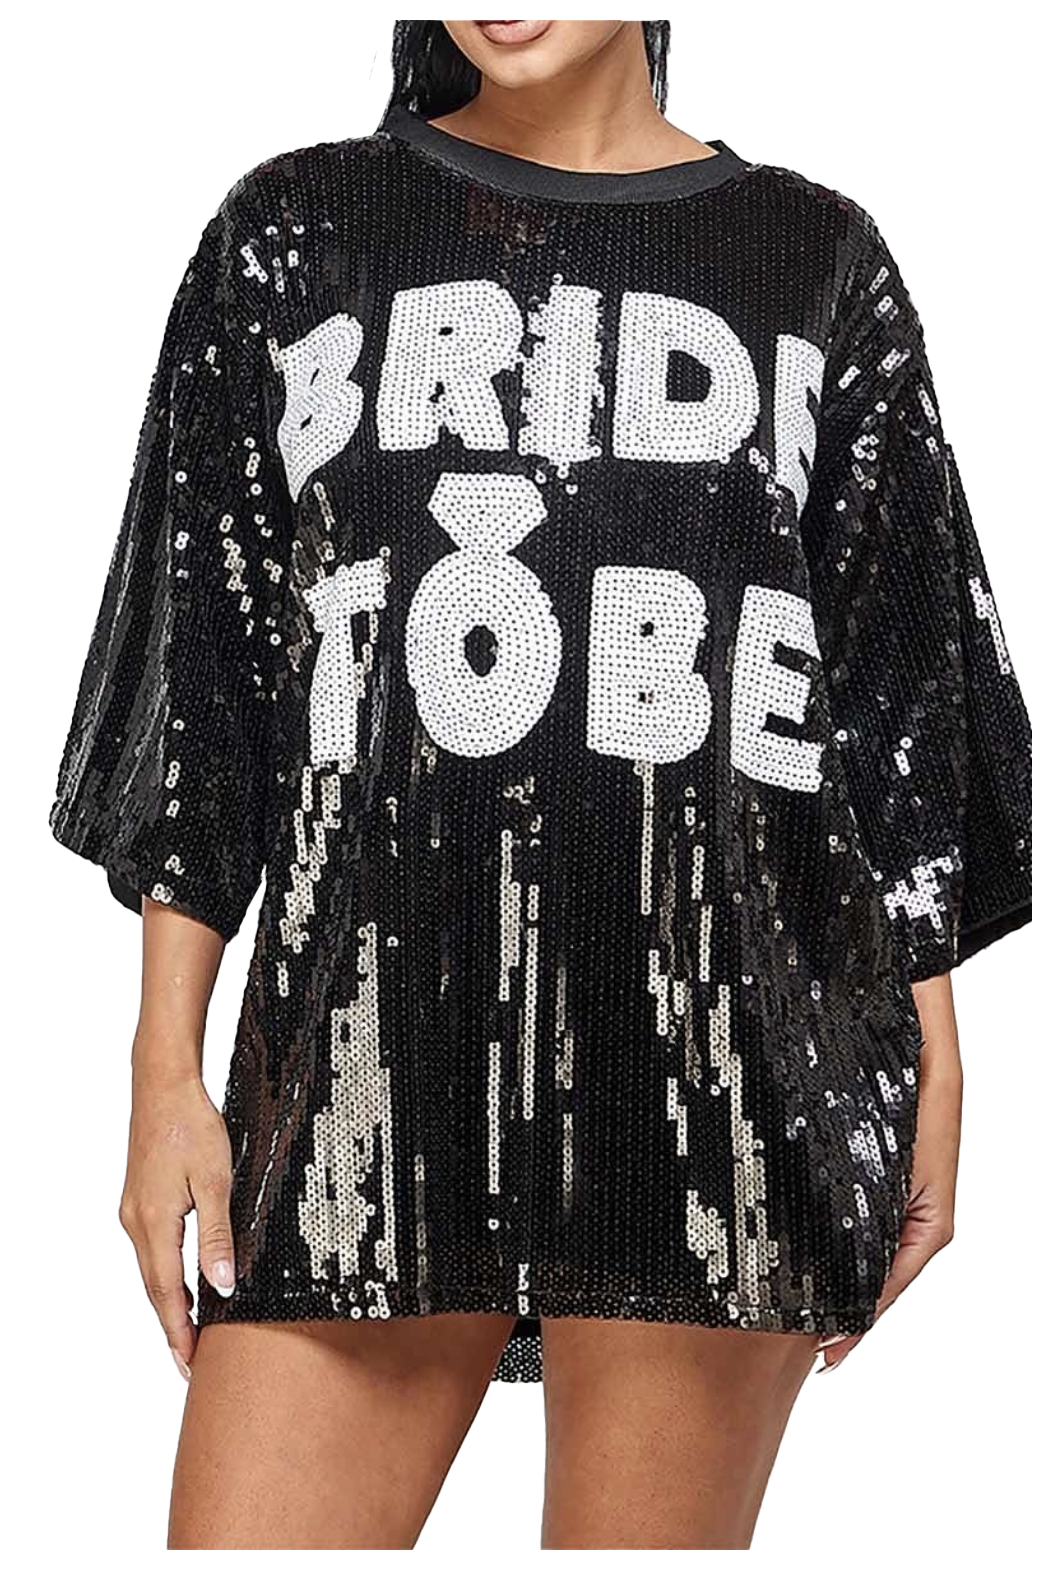 Bride to Be Tunic/T-Shirt Dress